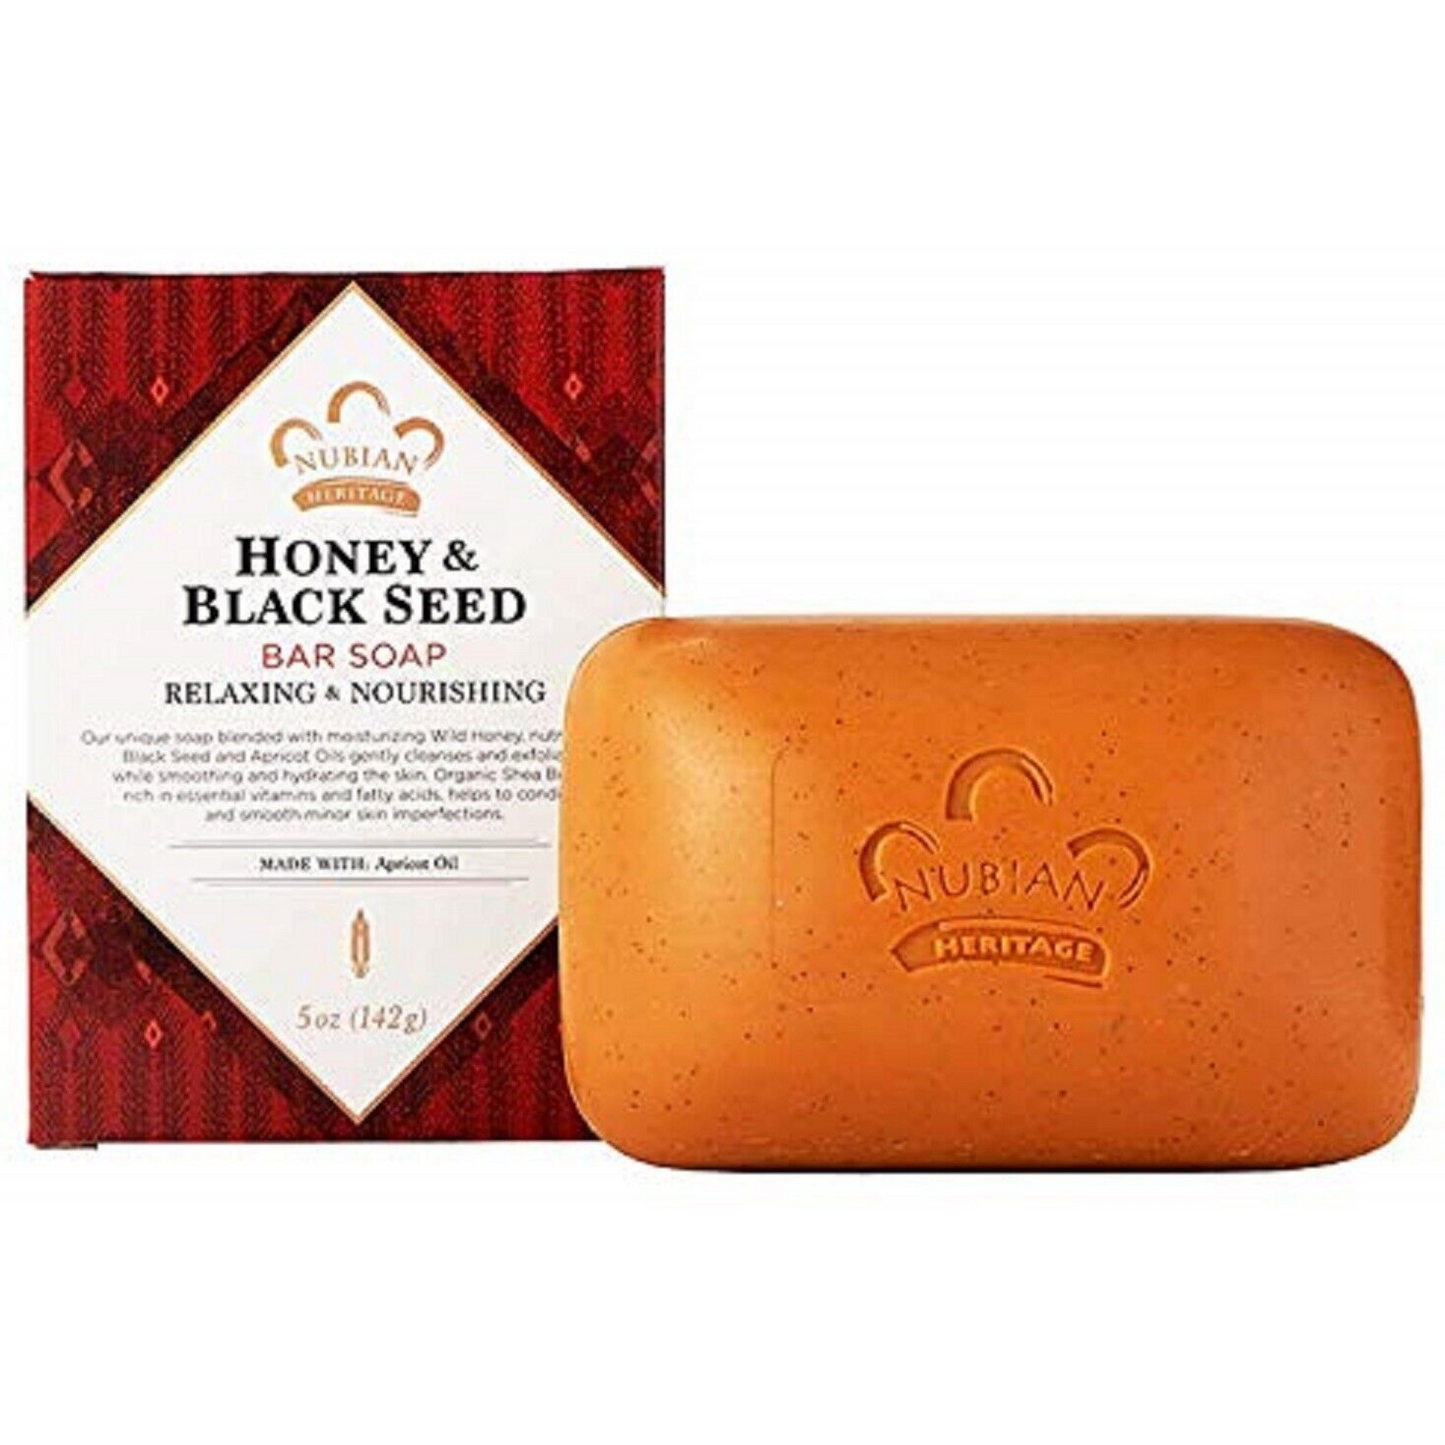 Primary Image of Nubian Heritage Honey Black Seed Bar Soap (5 oz) 